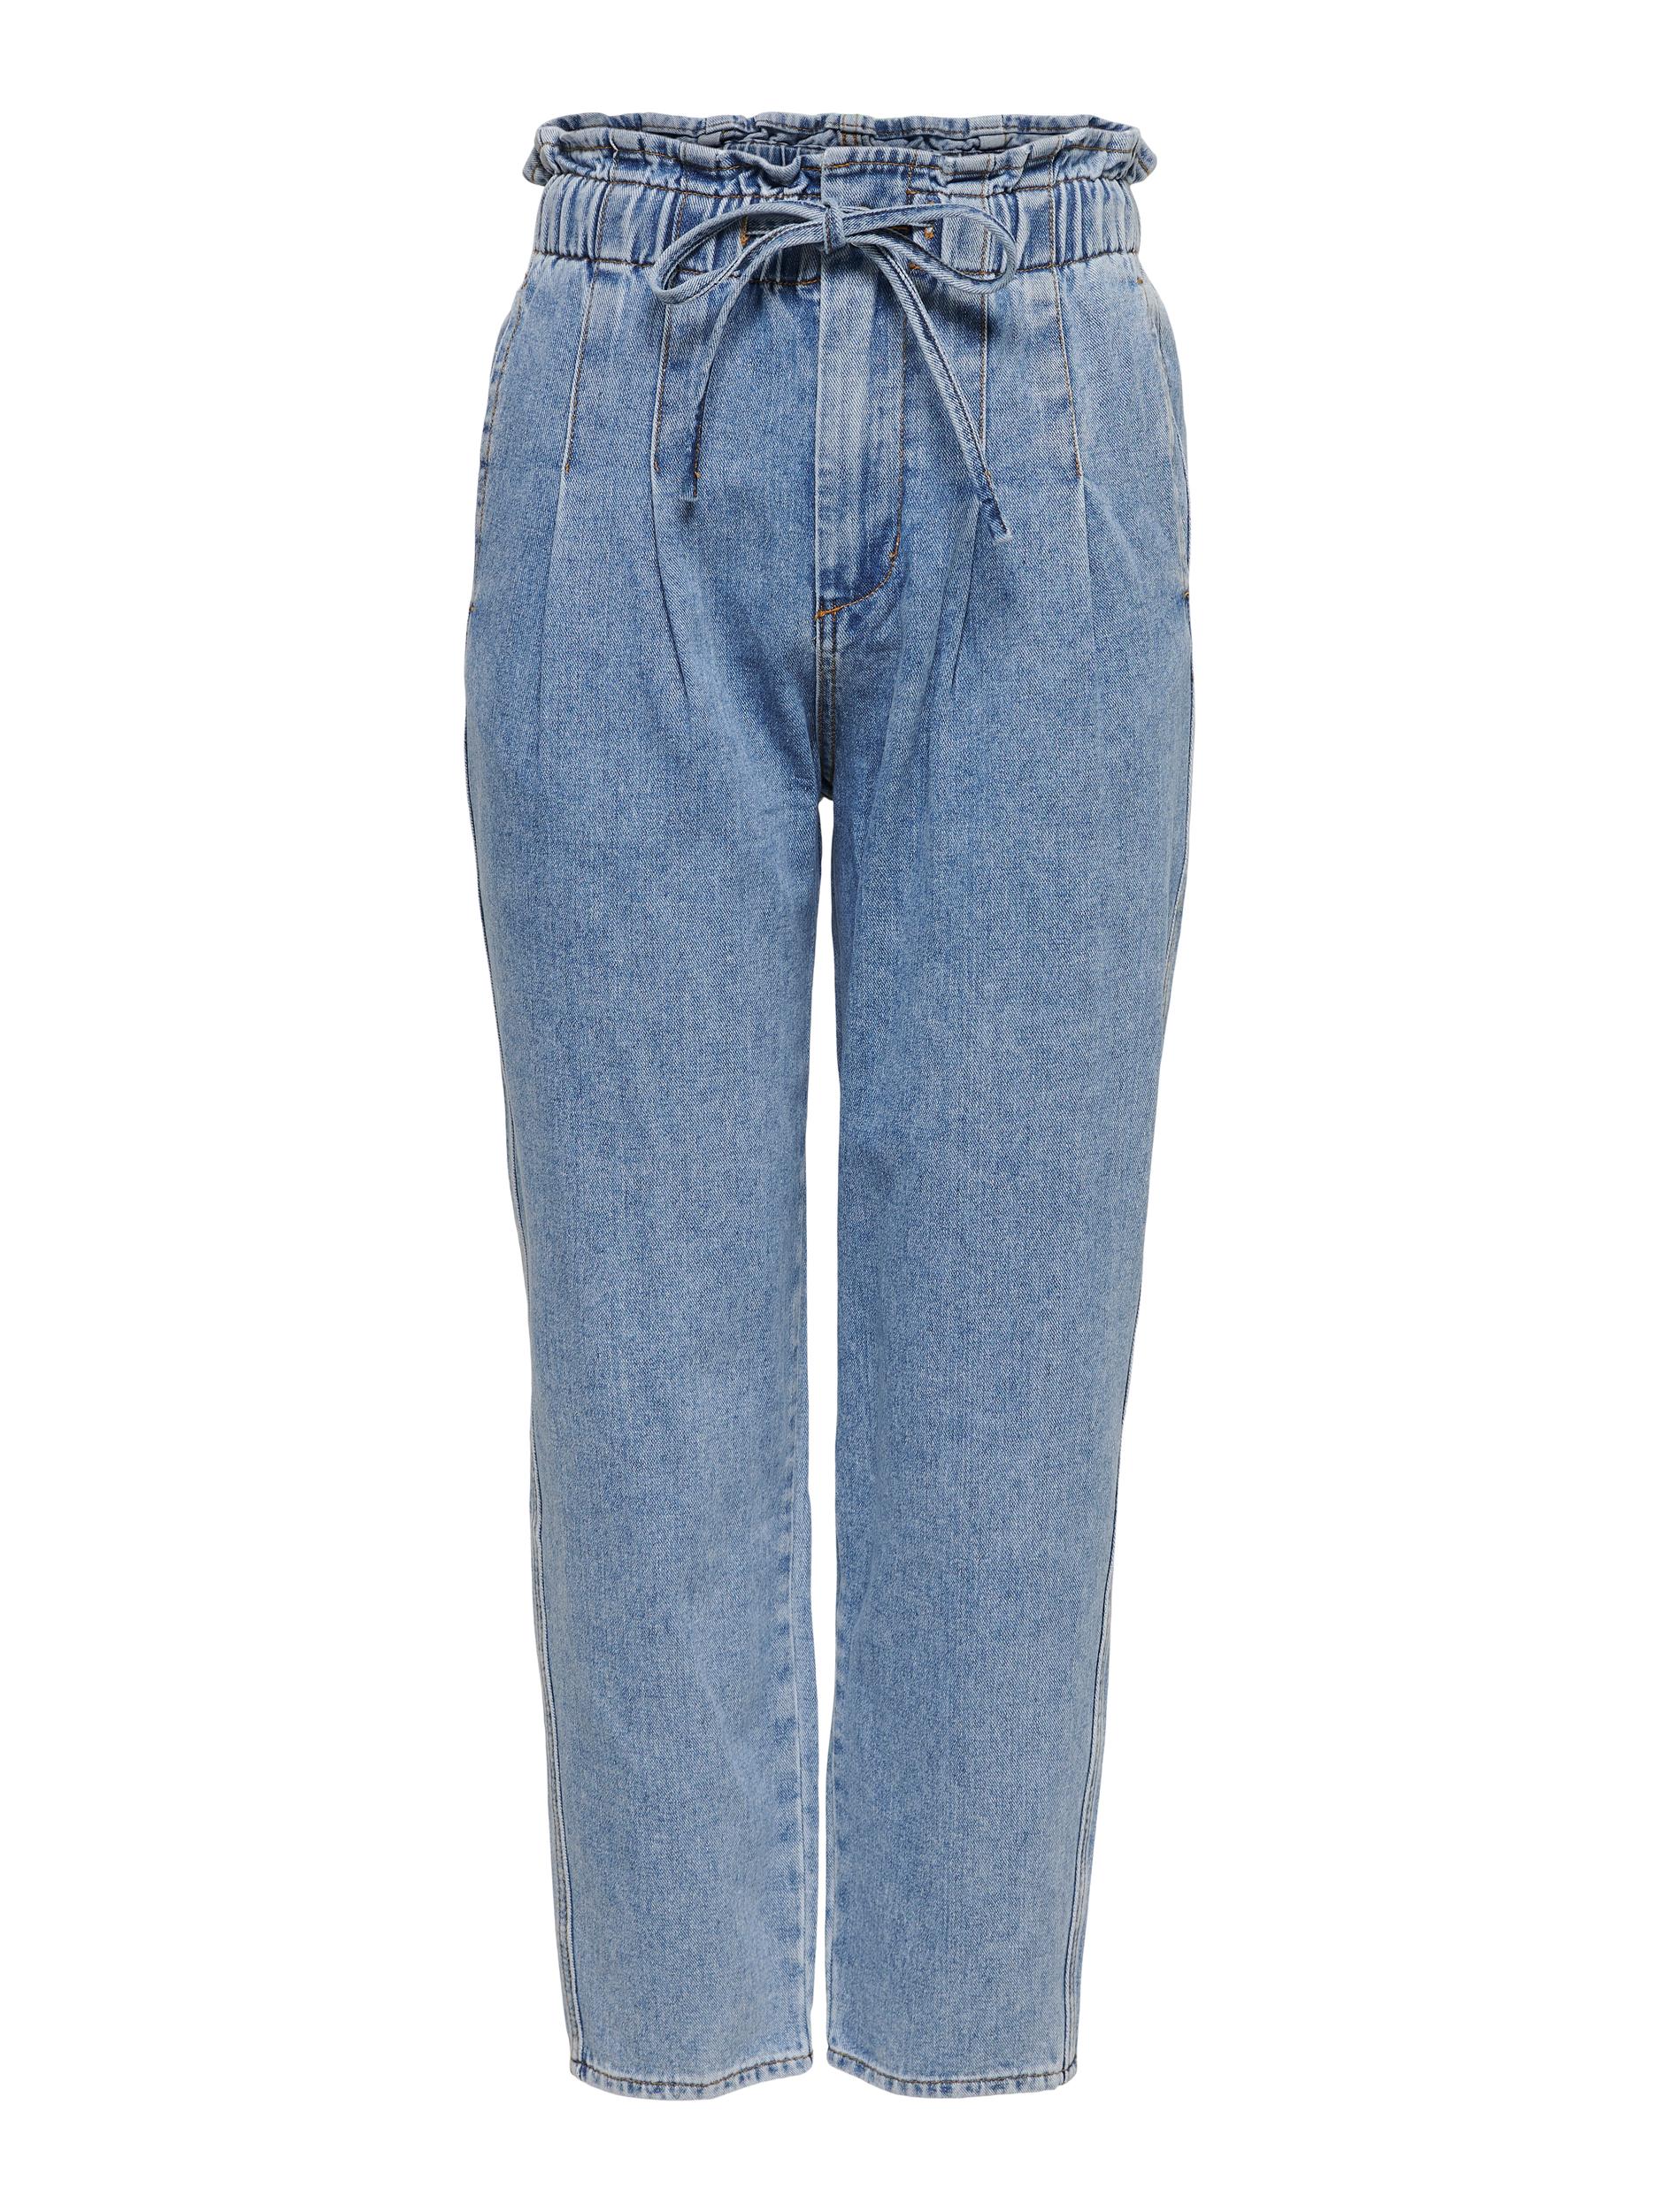 FINAL SALE - Lova high waist carrot fit jeans, MEDIUM BLUE DENIM, large